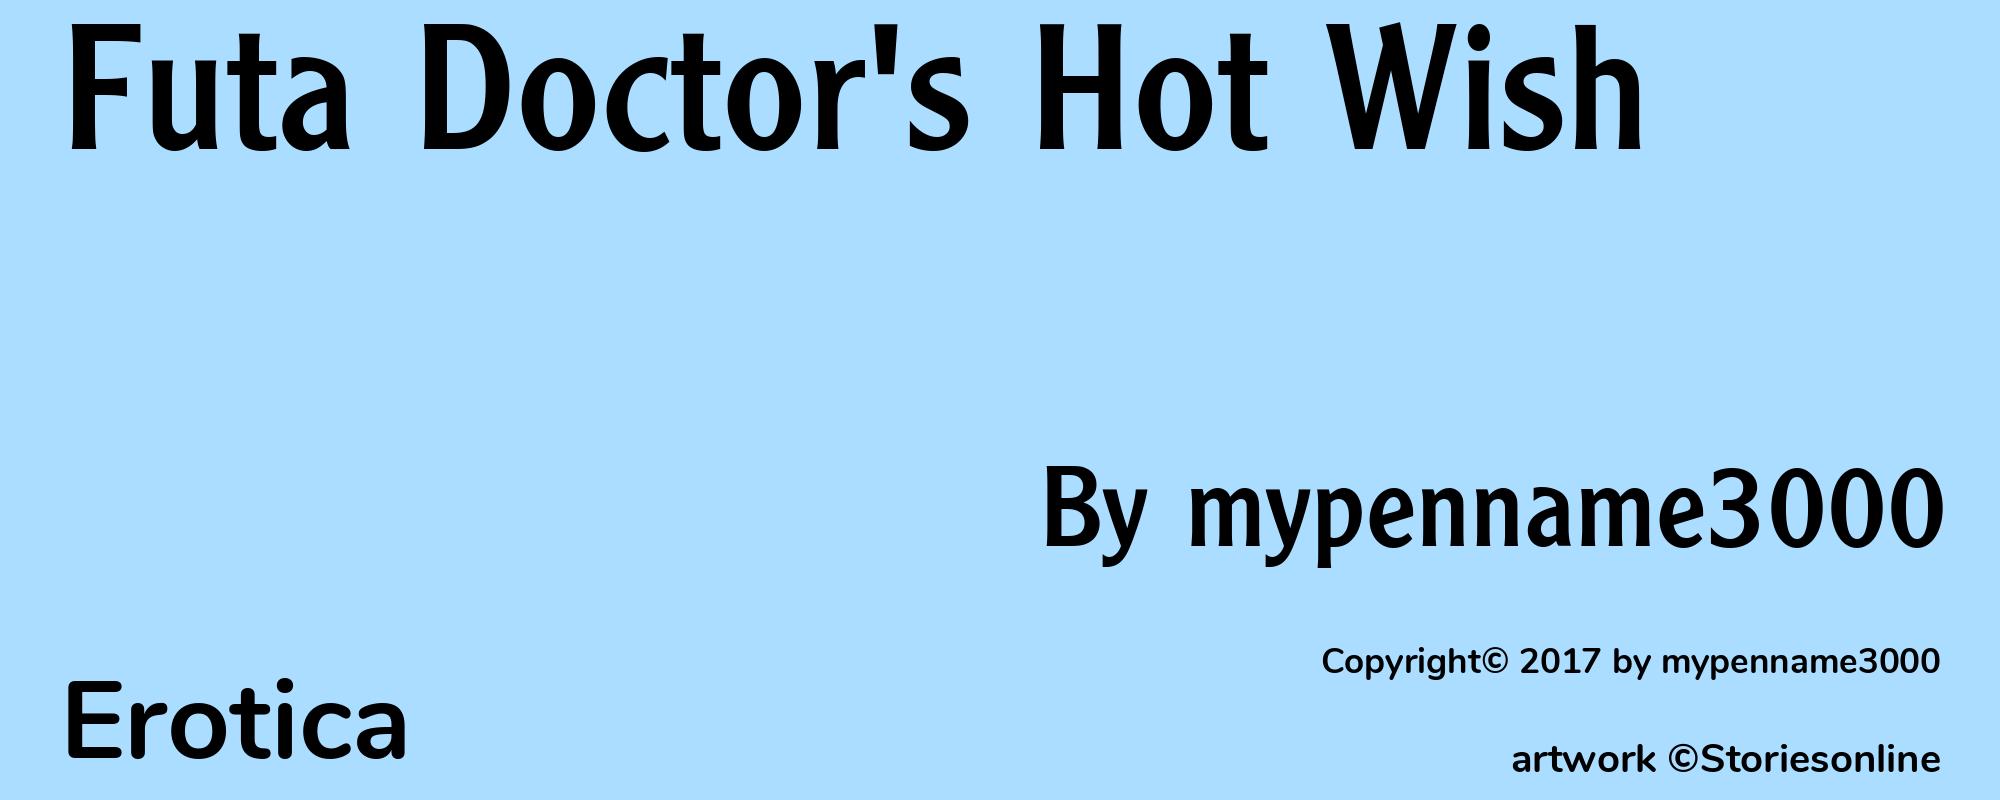 Futa Doctor's Hot Wish - Cover